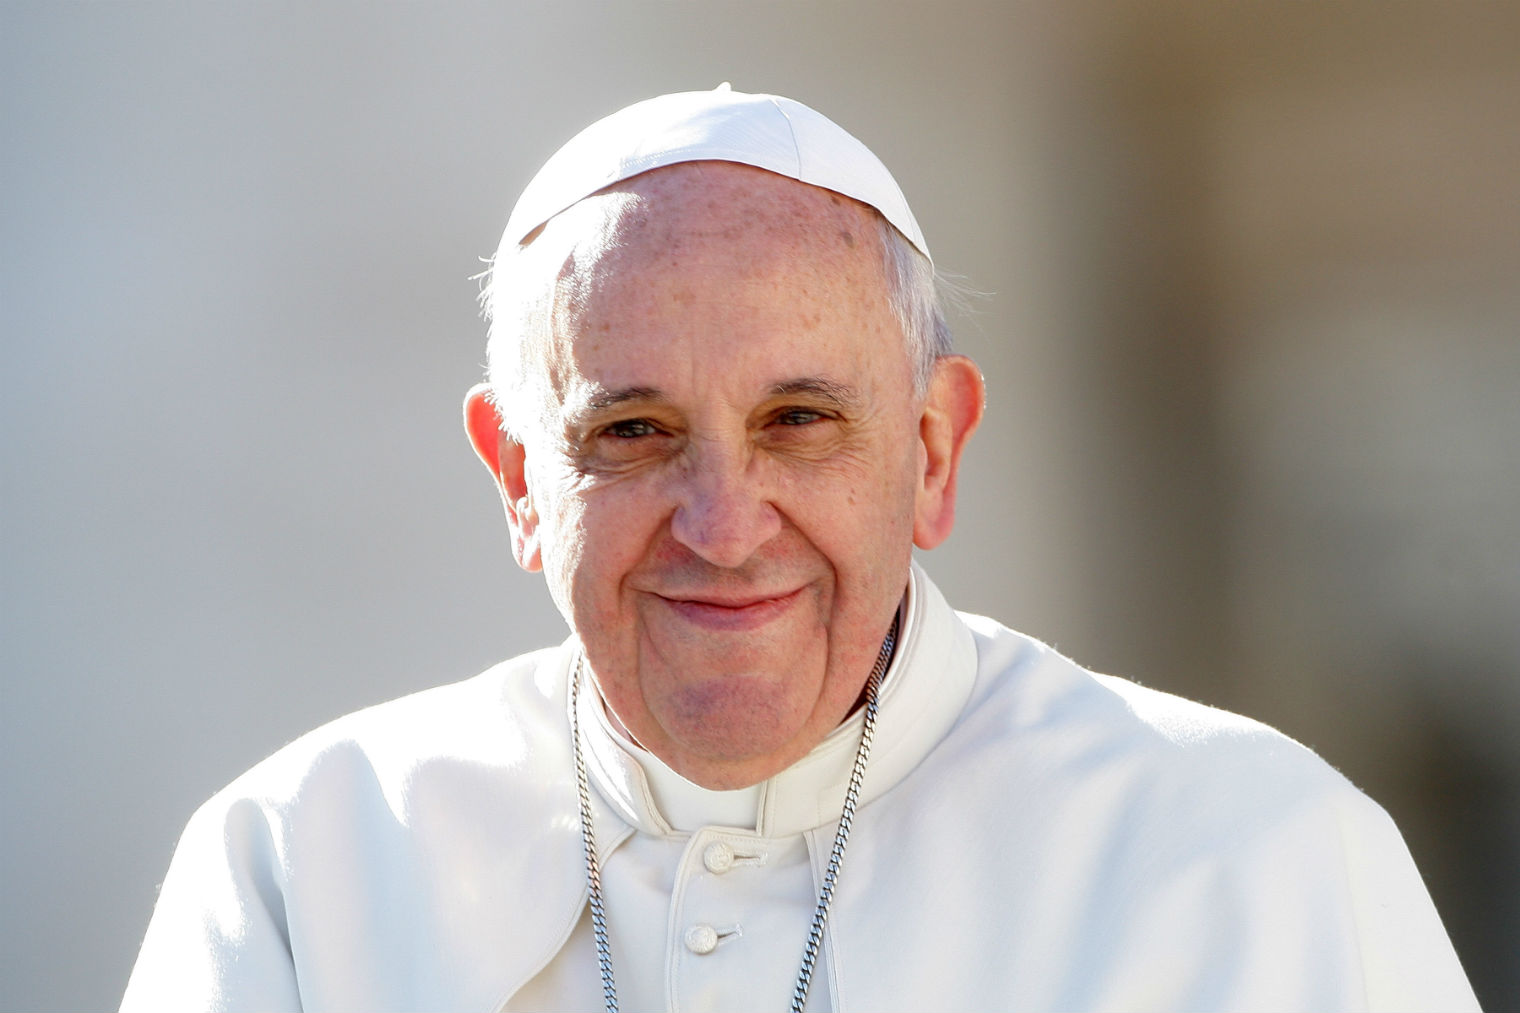 Image: Pope Francis’ new book praises George Floyd/BLM protests, blasts anti-lockdown protests